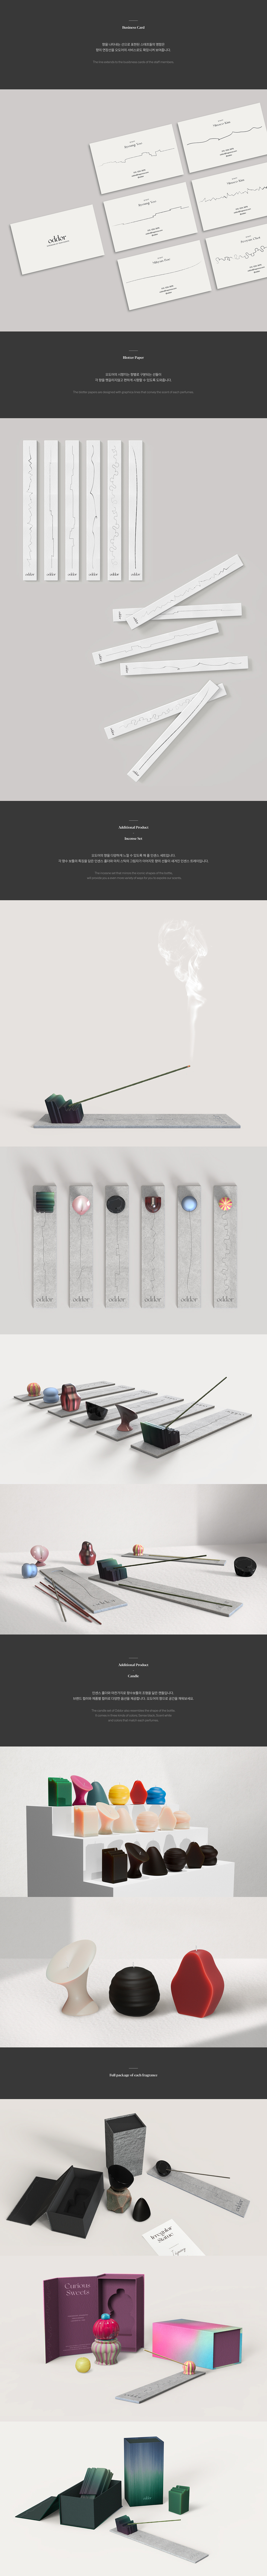 3D branding  cosmetics graphic design  perfume product product design  Fragrance